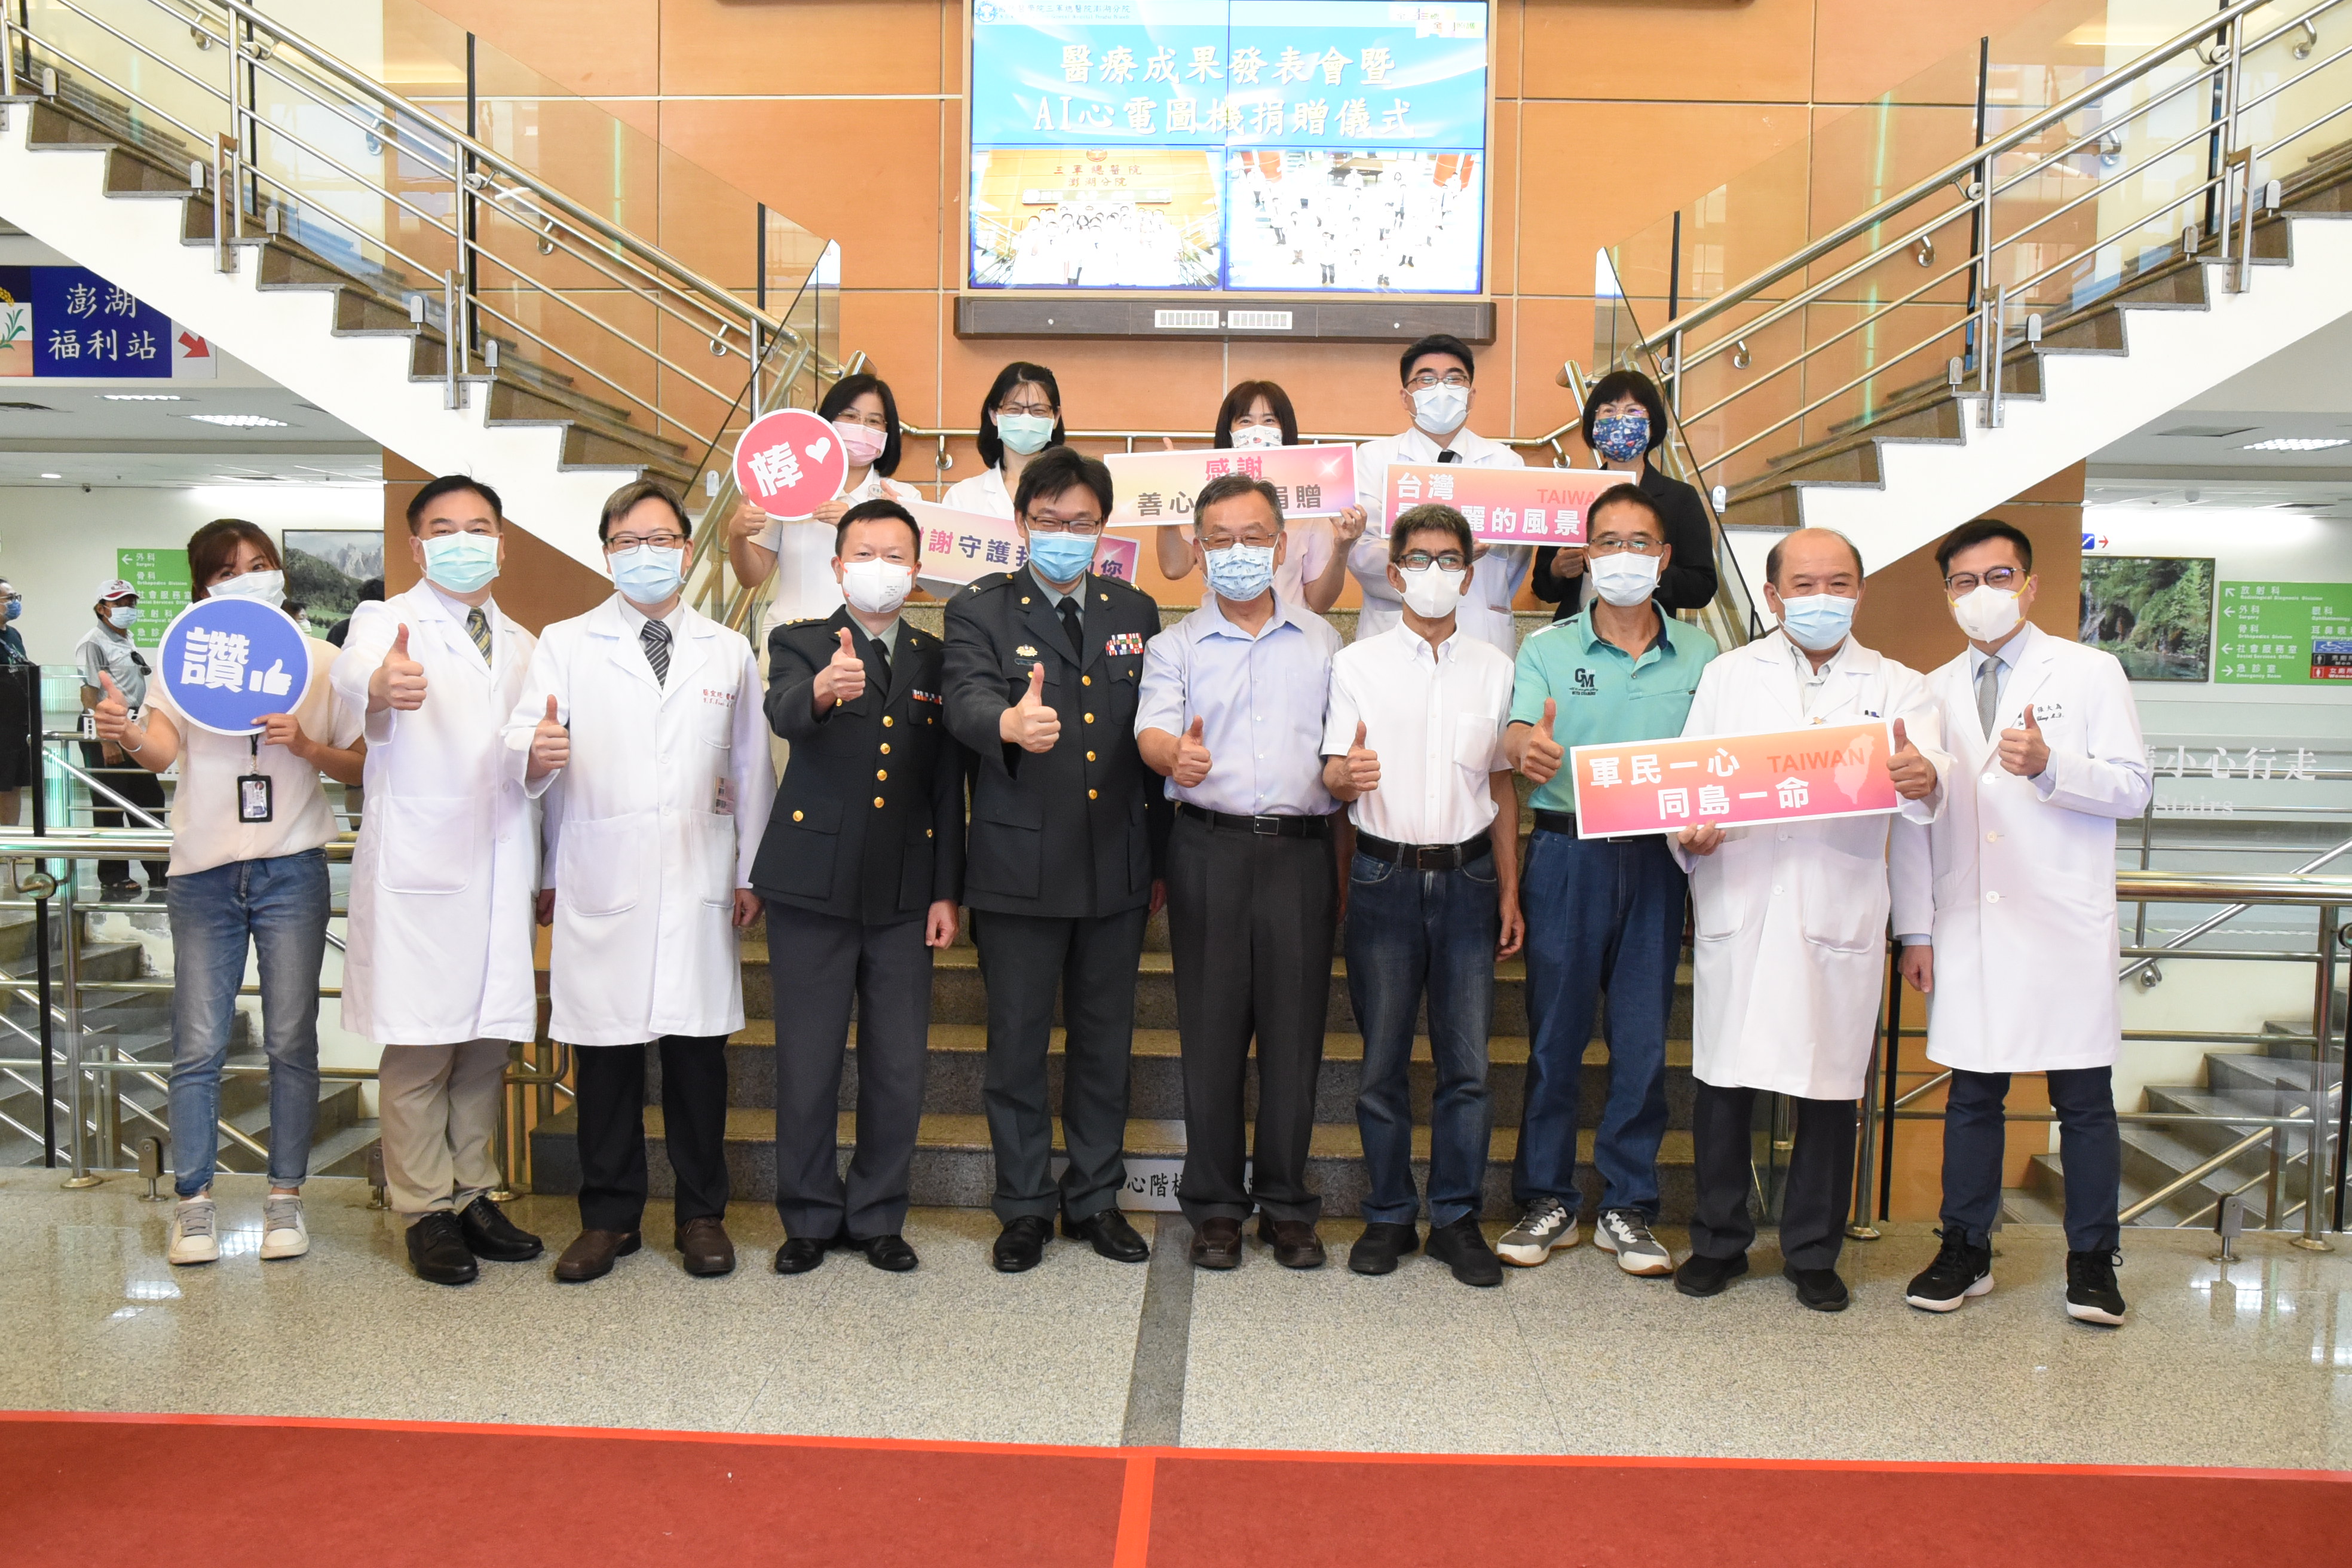 Medical Achievements Presentation at the Tri-Service General Hospital Penghu Branch